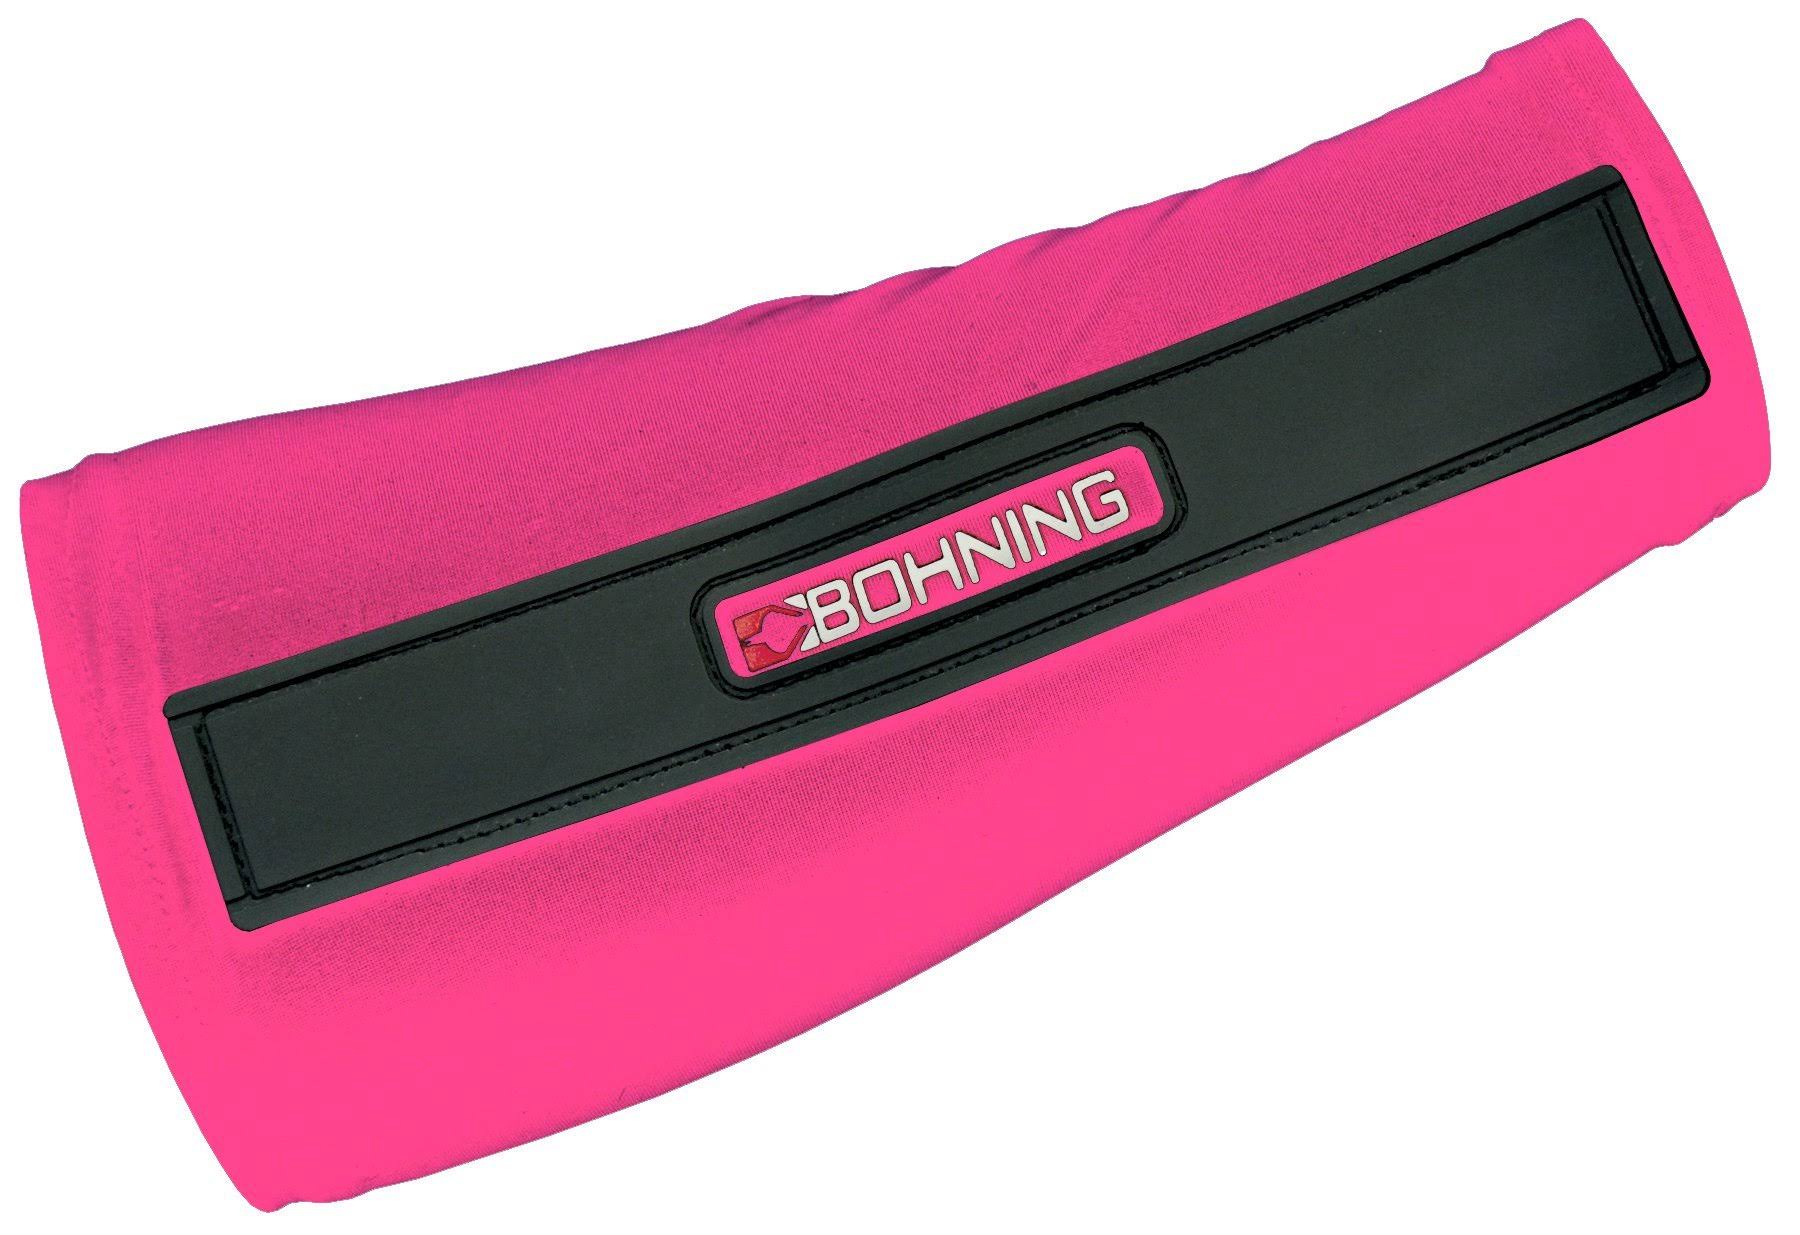 Bohning Slip On Armguard - Hot Pink, Small